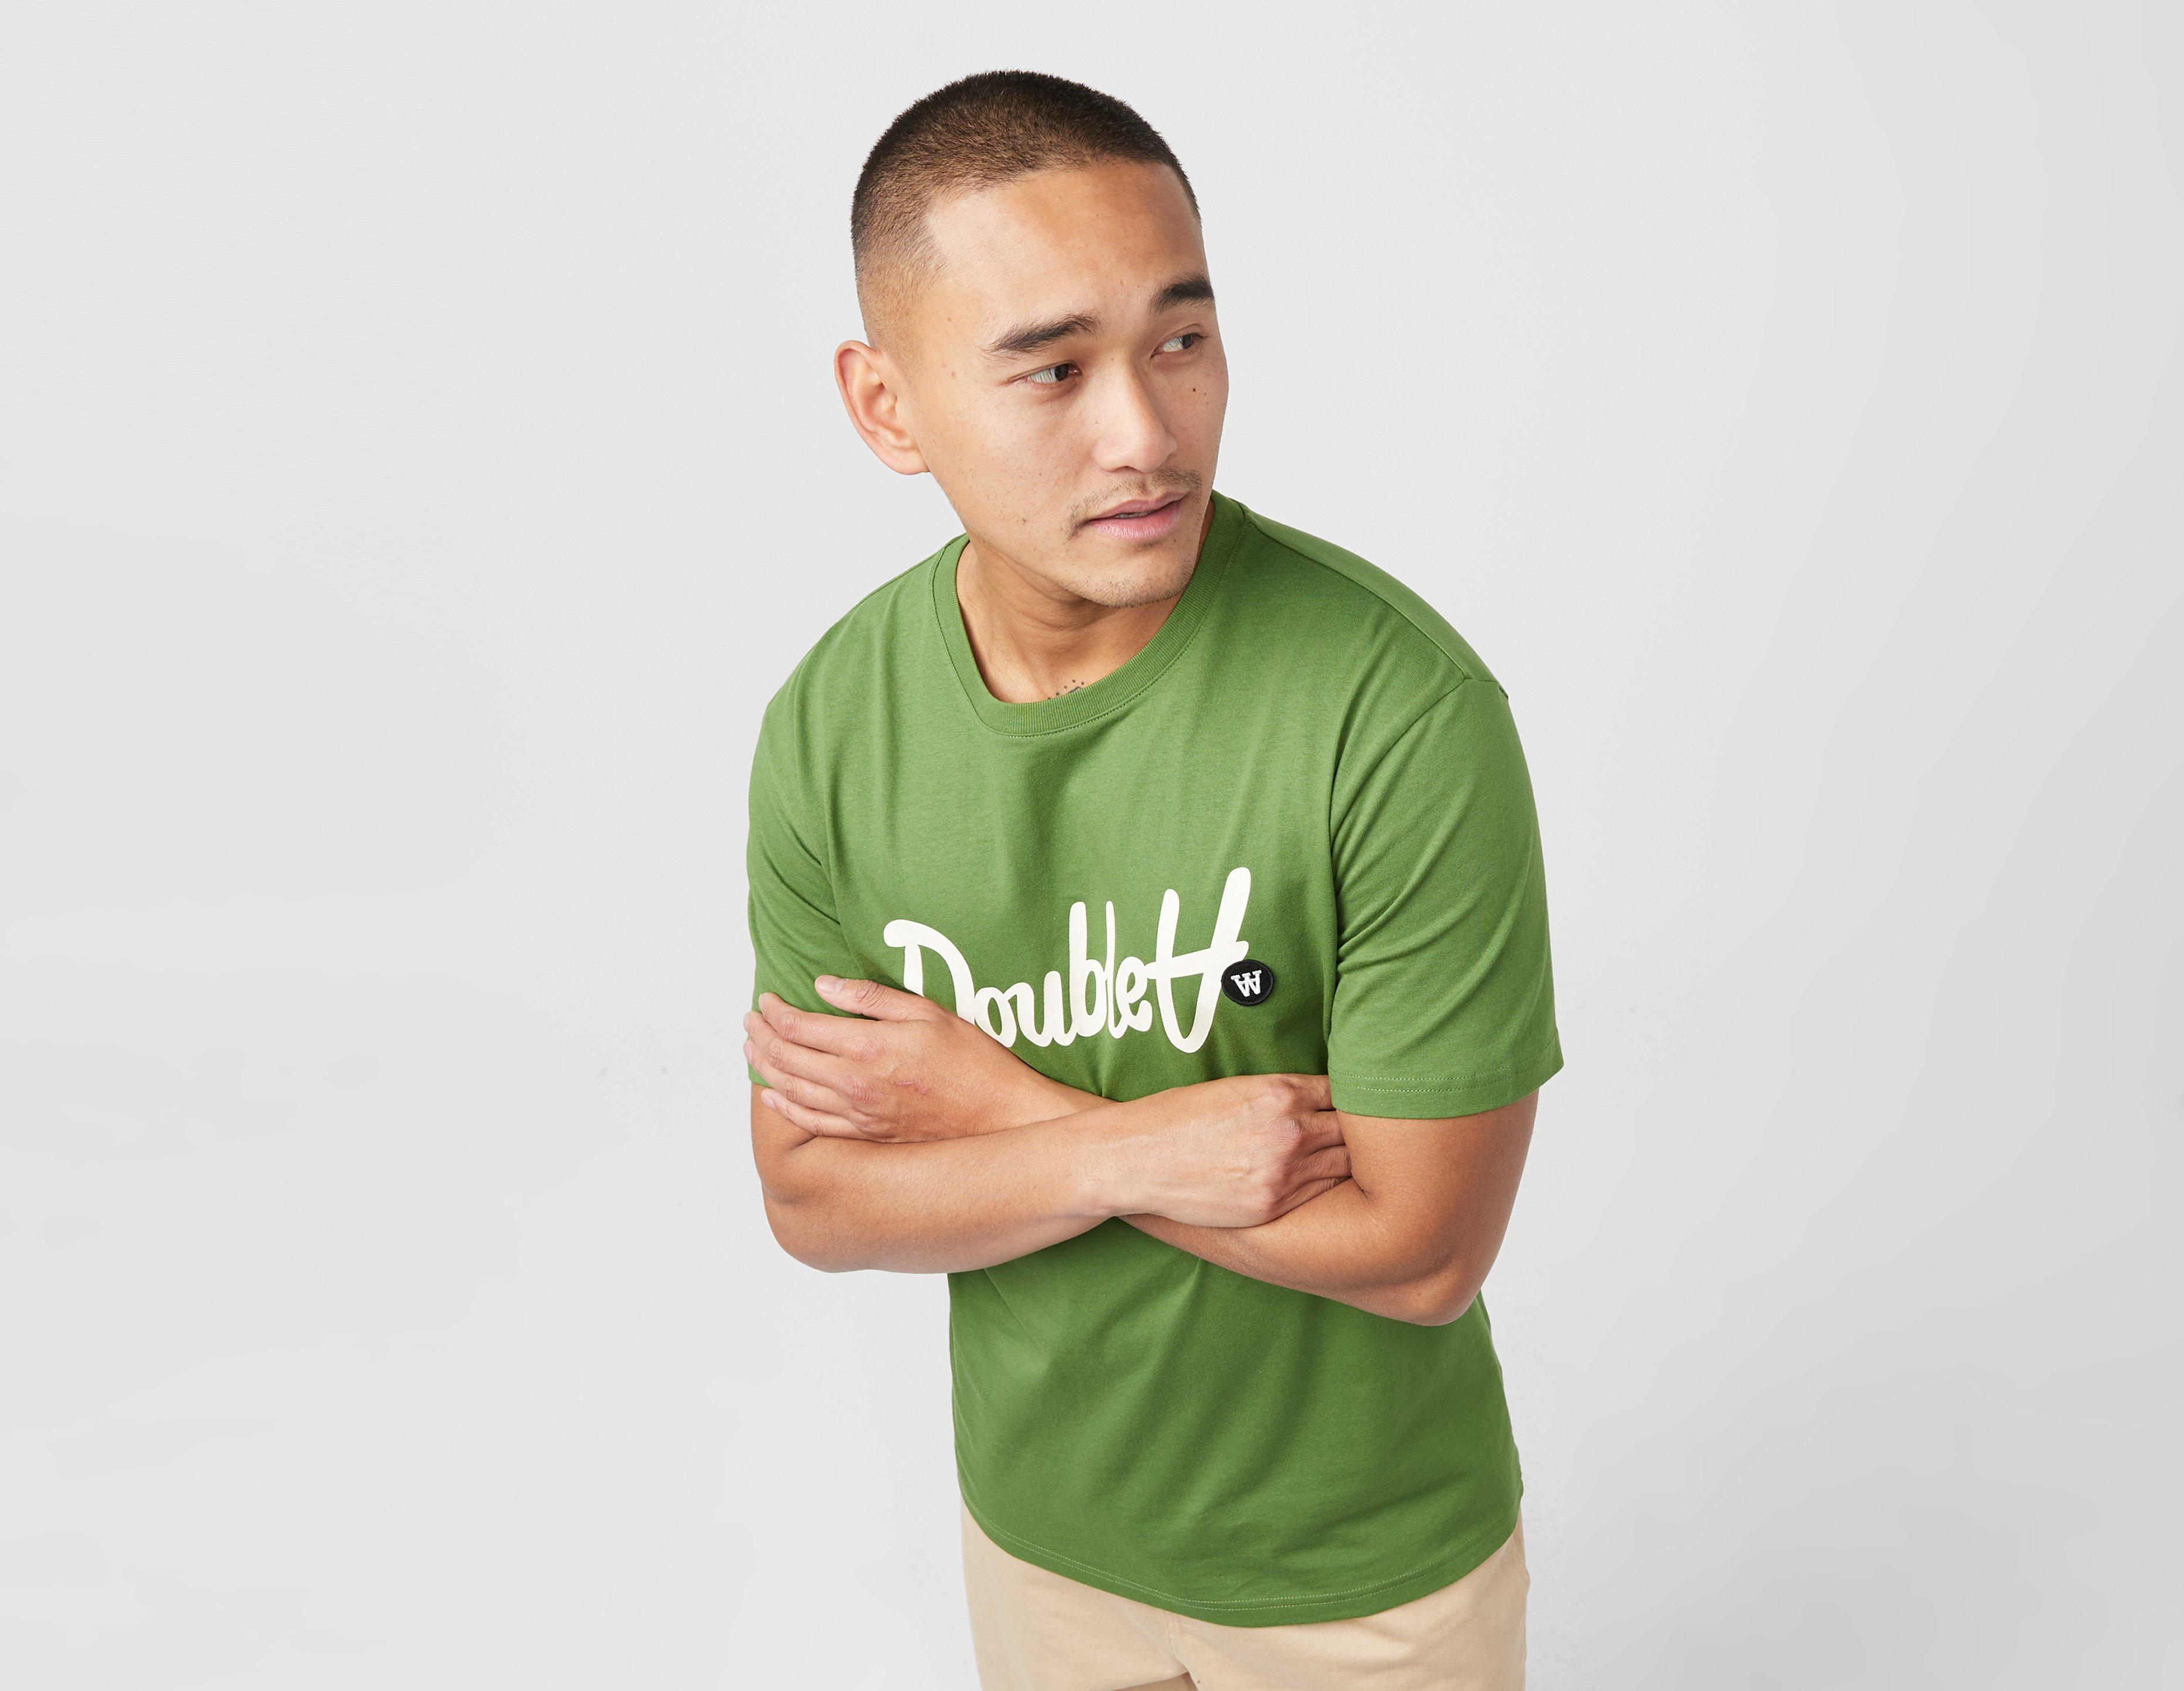 Klassic - Shirt Green Wood Healthdesign? A Trey Toni - Double cotton Ace | neutri Wood T sweatshirt by Script